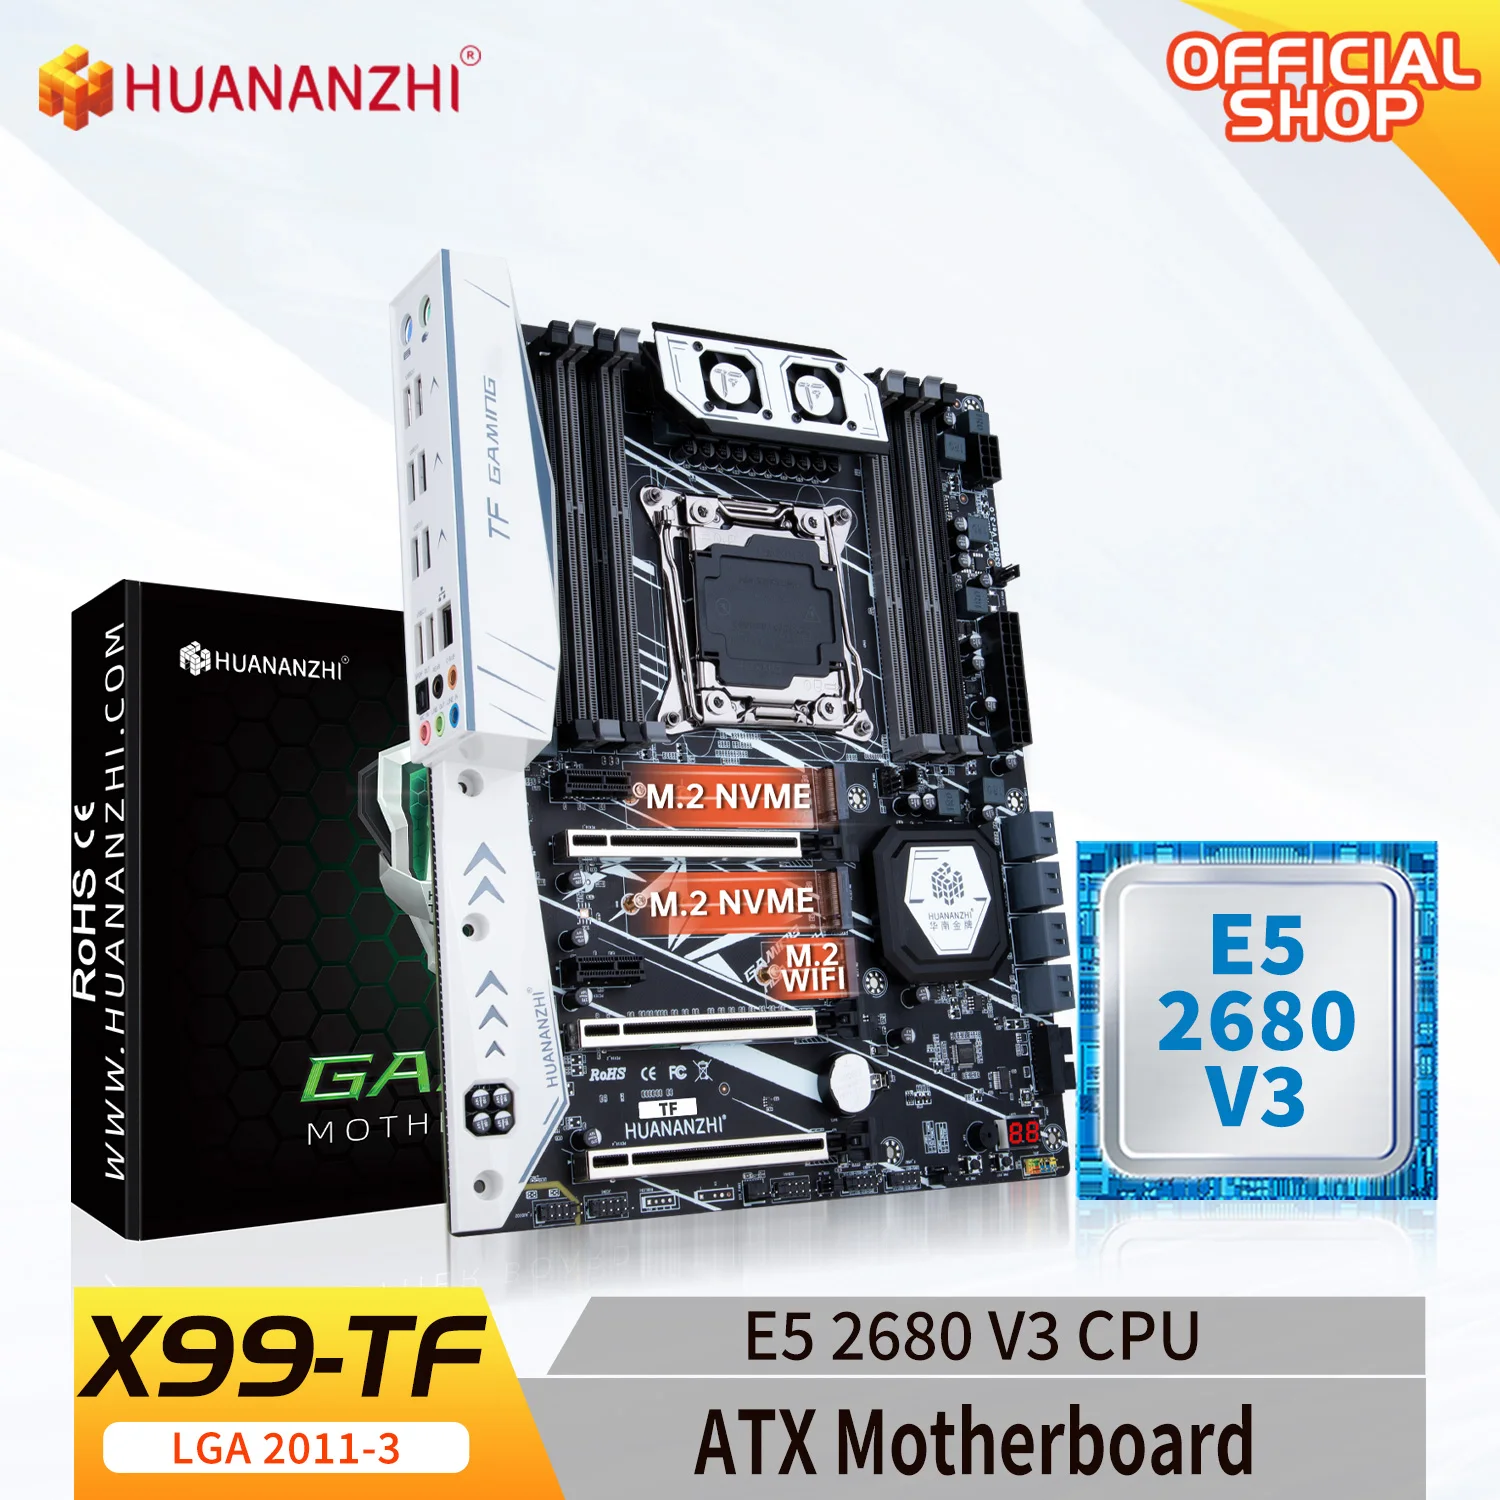 Материнская плата HUANANZHI X99 TF LGA 2011-3 XEON X99 с поддержкой Intel E5 2680 V3 DDR4 RECC memory combo kit set NVME SATA